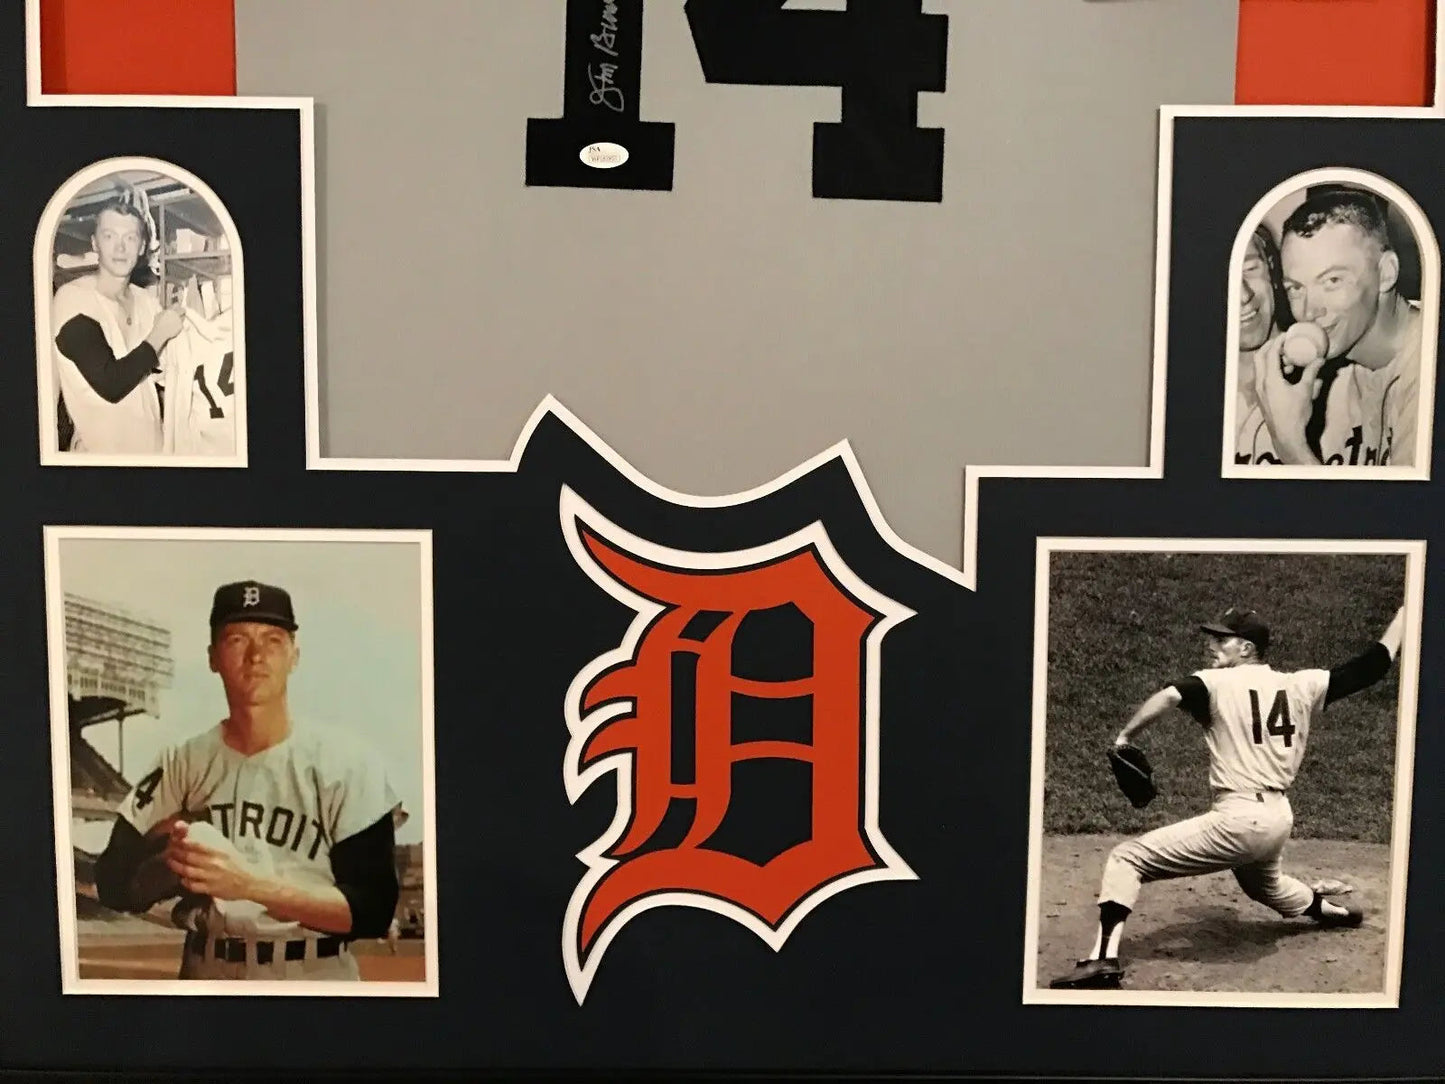 MVP Authentics Framed Jim Bunning Autographed Signed Detroit Tigers Jersey Jsa Coa 360 sports jersey framing , jersey framing